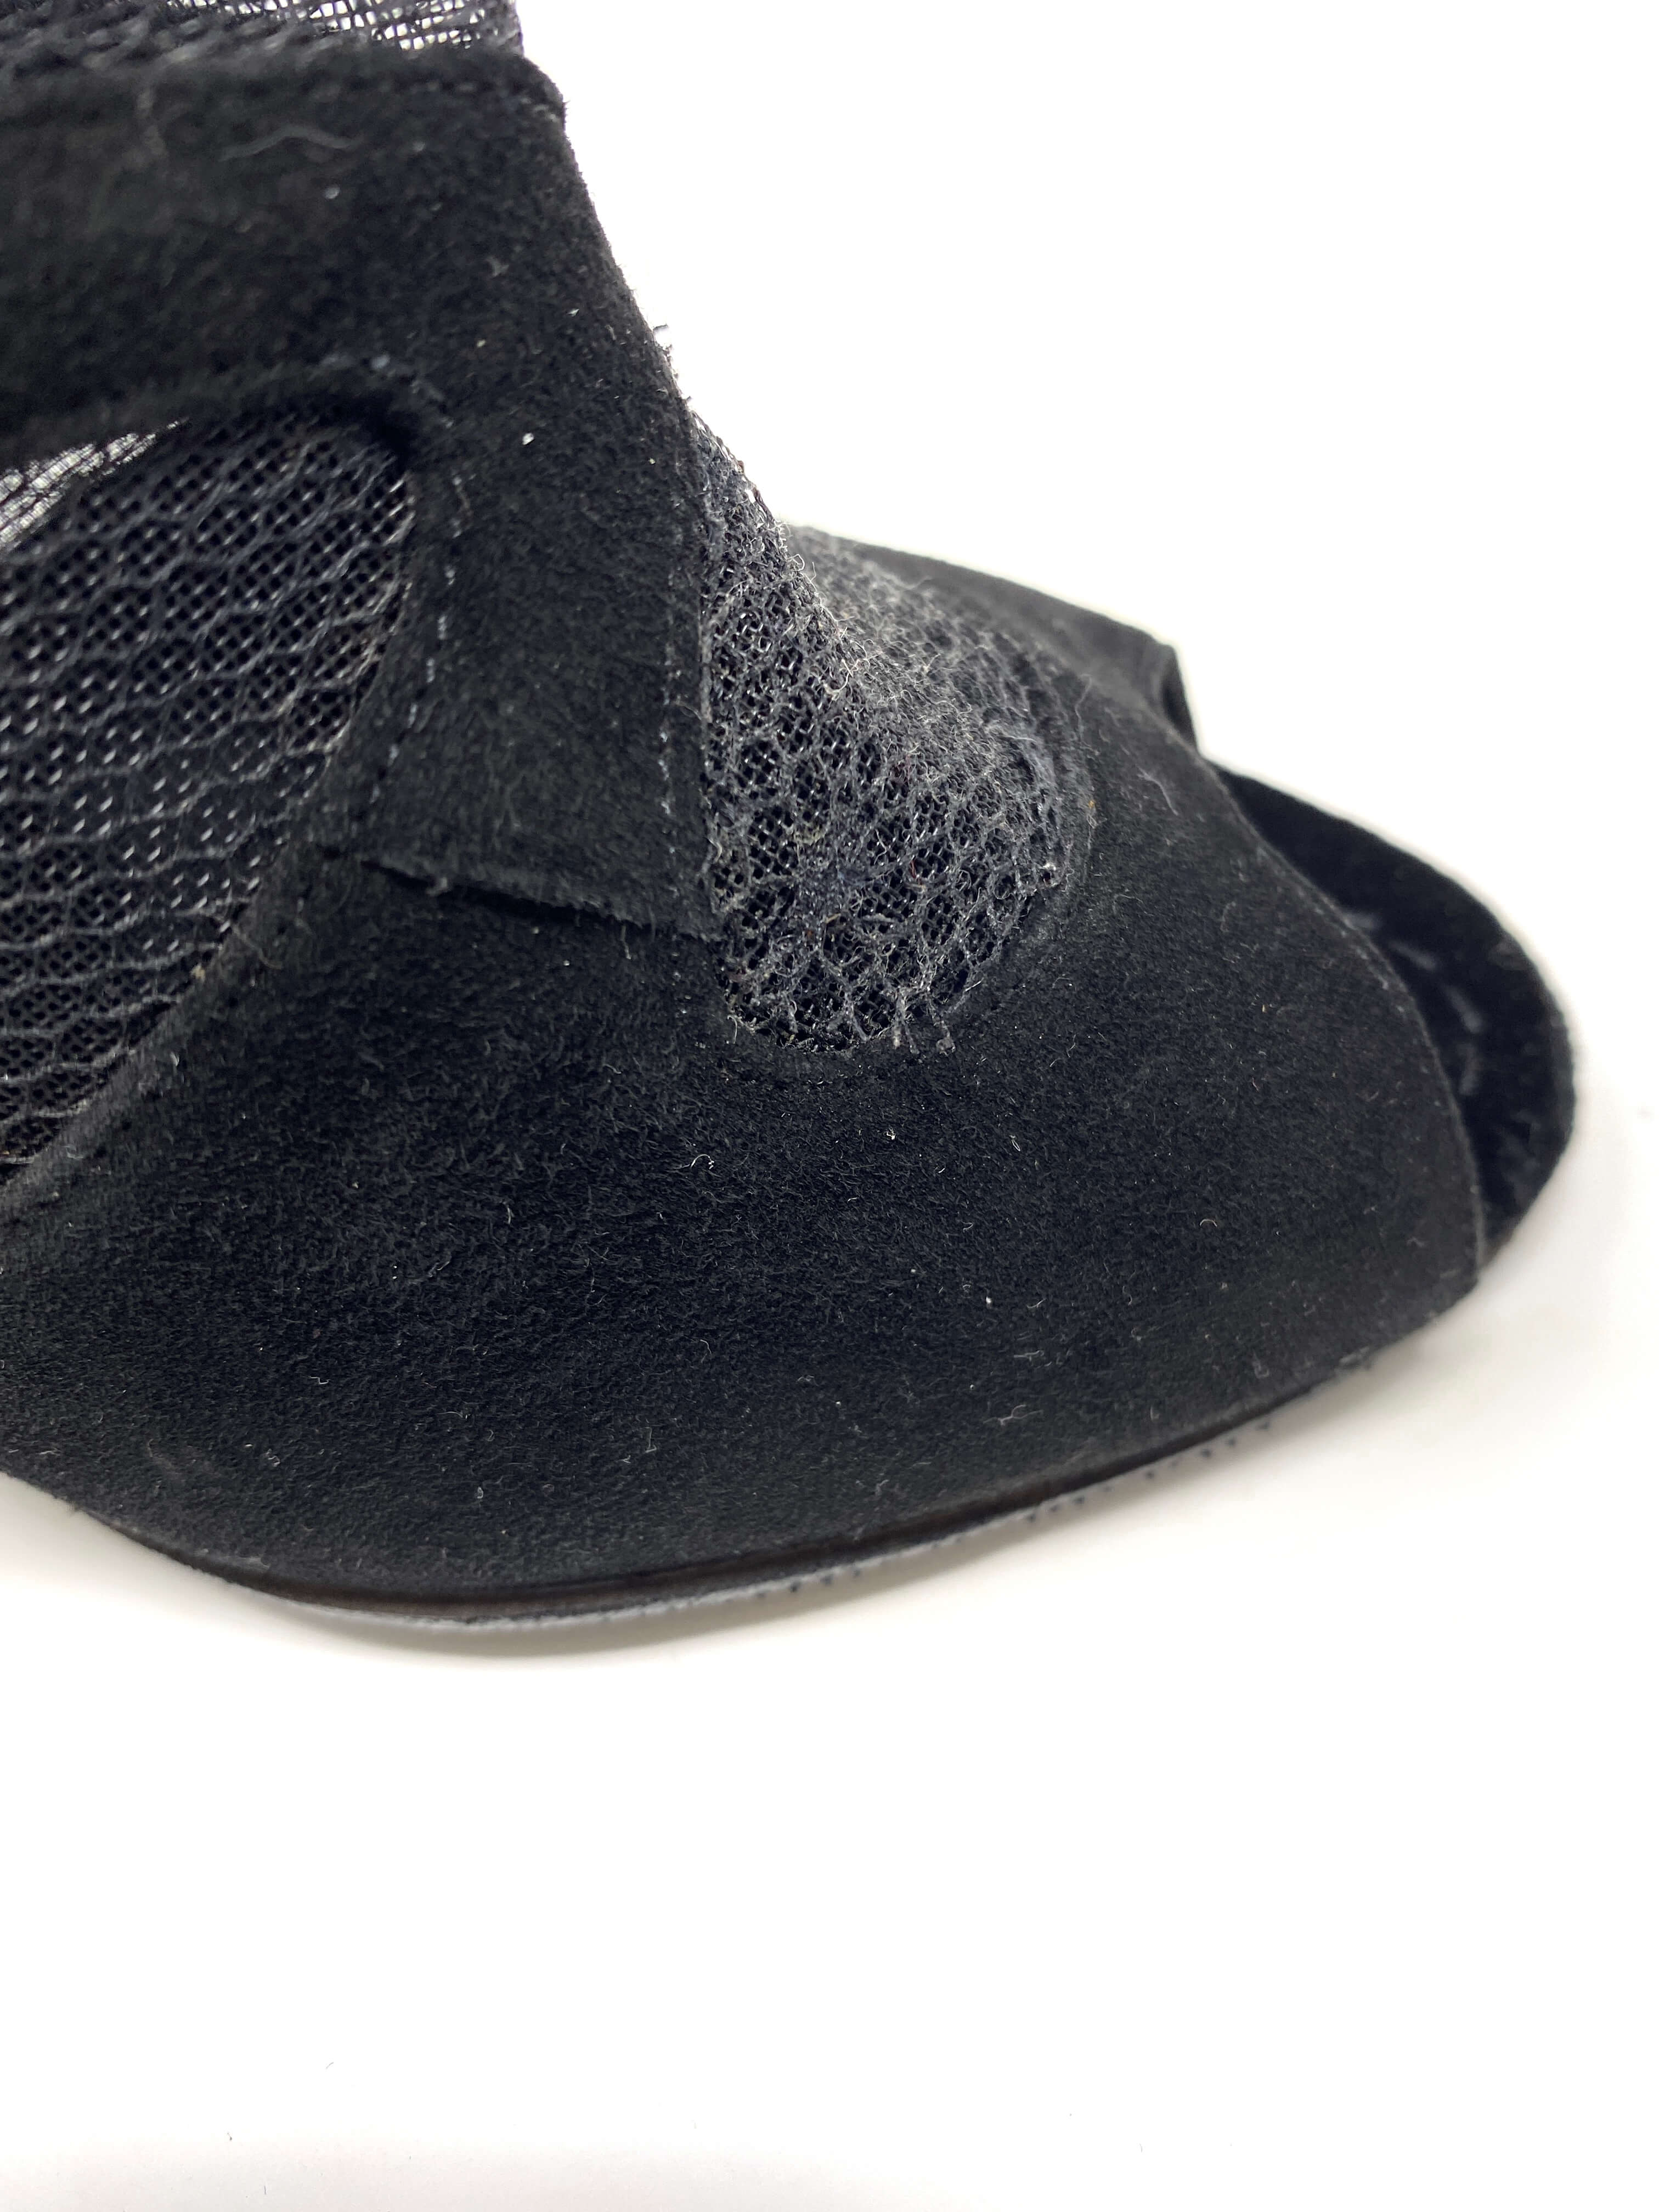 Dolce & Gabbana shoes; high heels; black; open toe